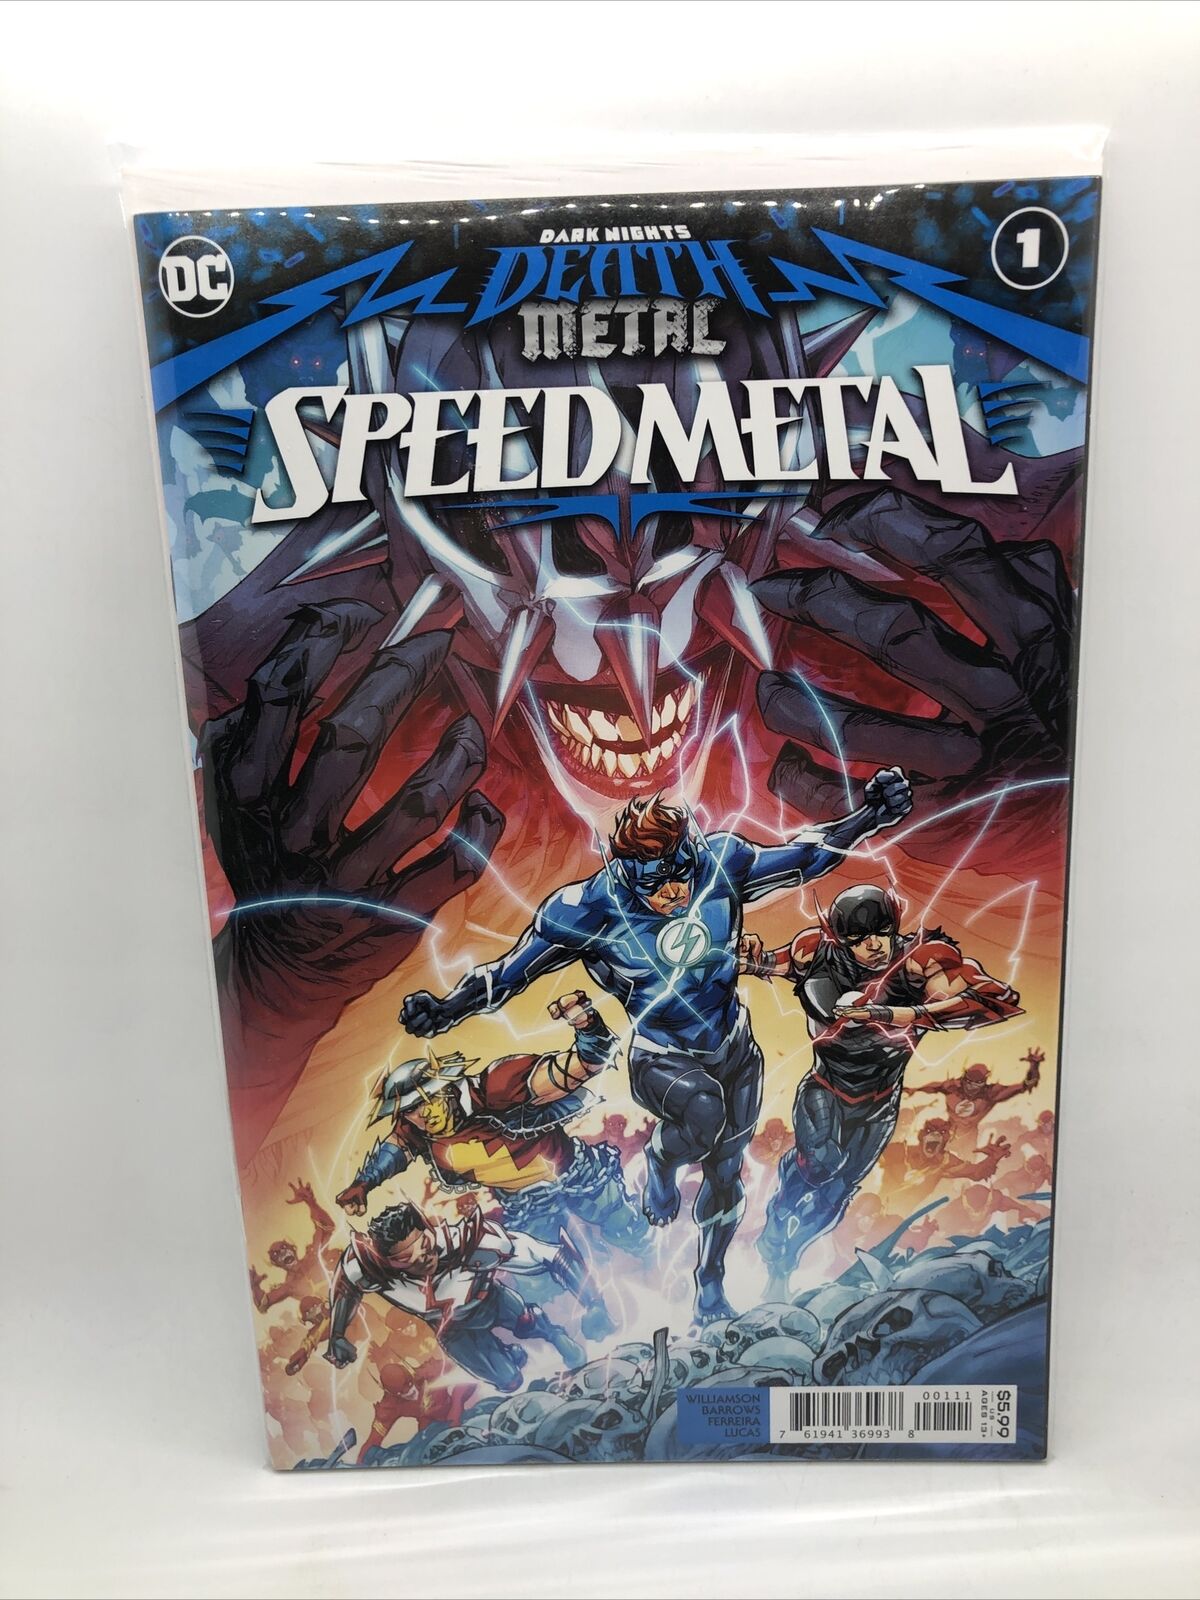 Dark Nights Death Metal Speed Metal #1 DC Comics Howard Porter Main Cover